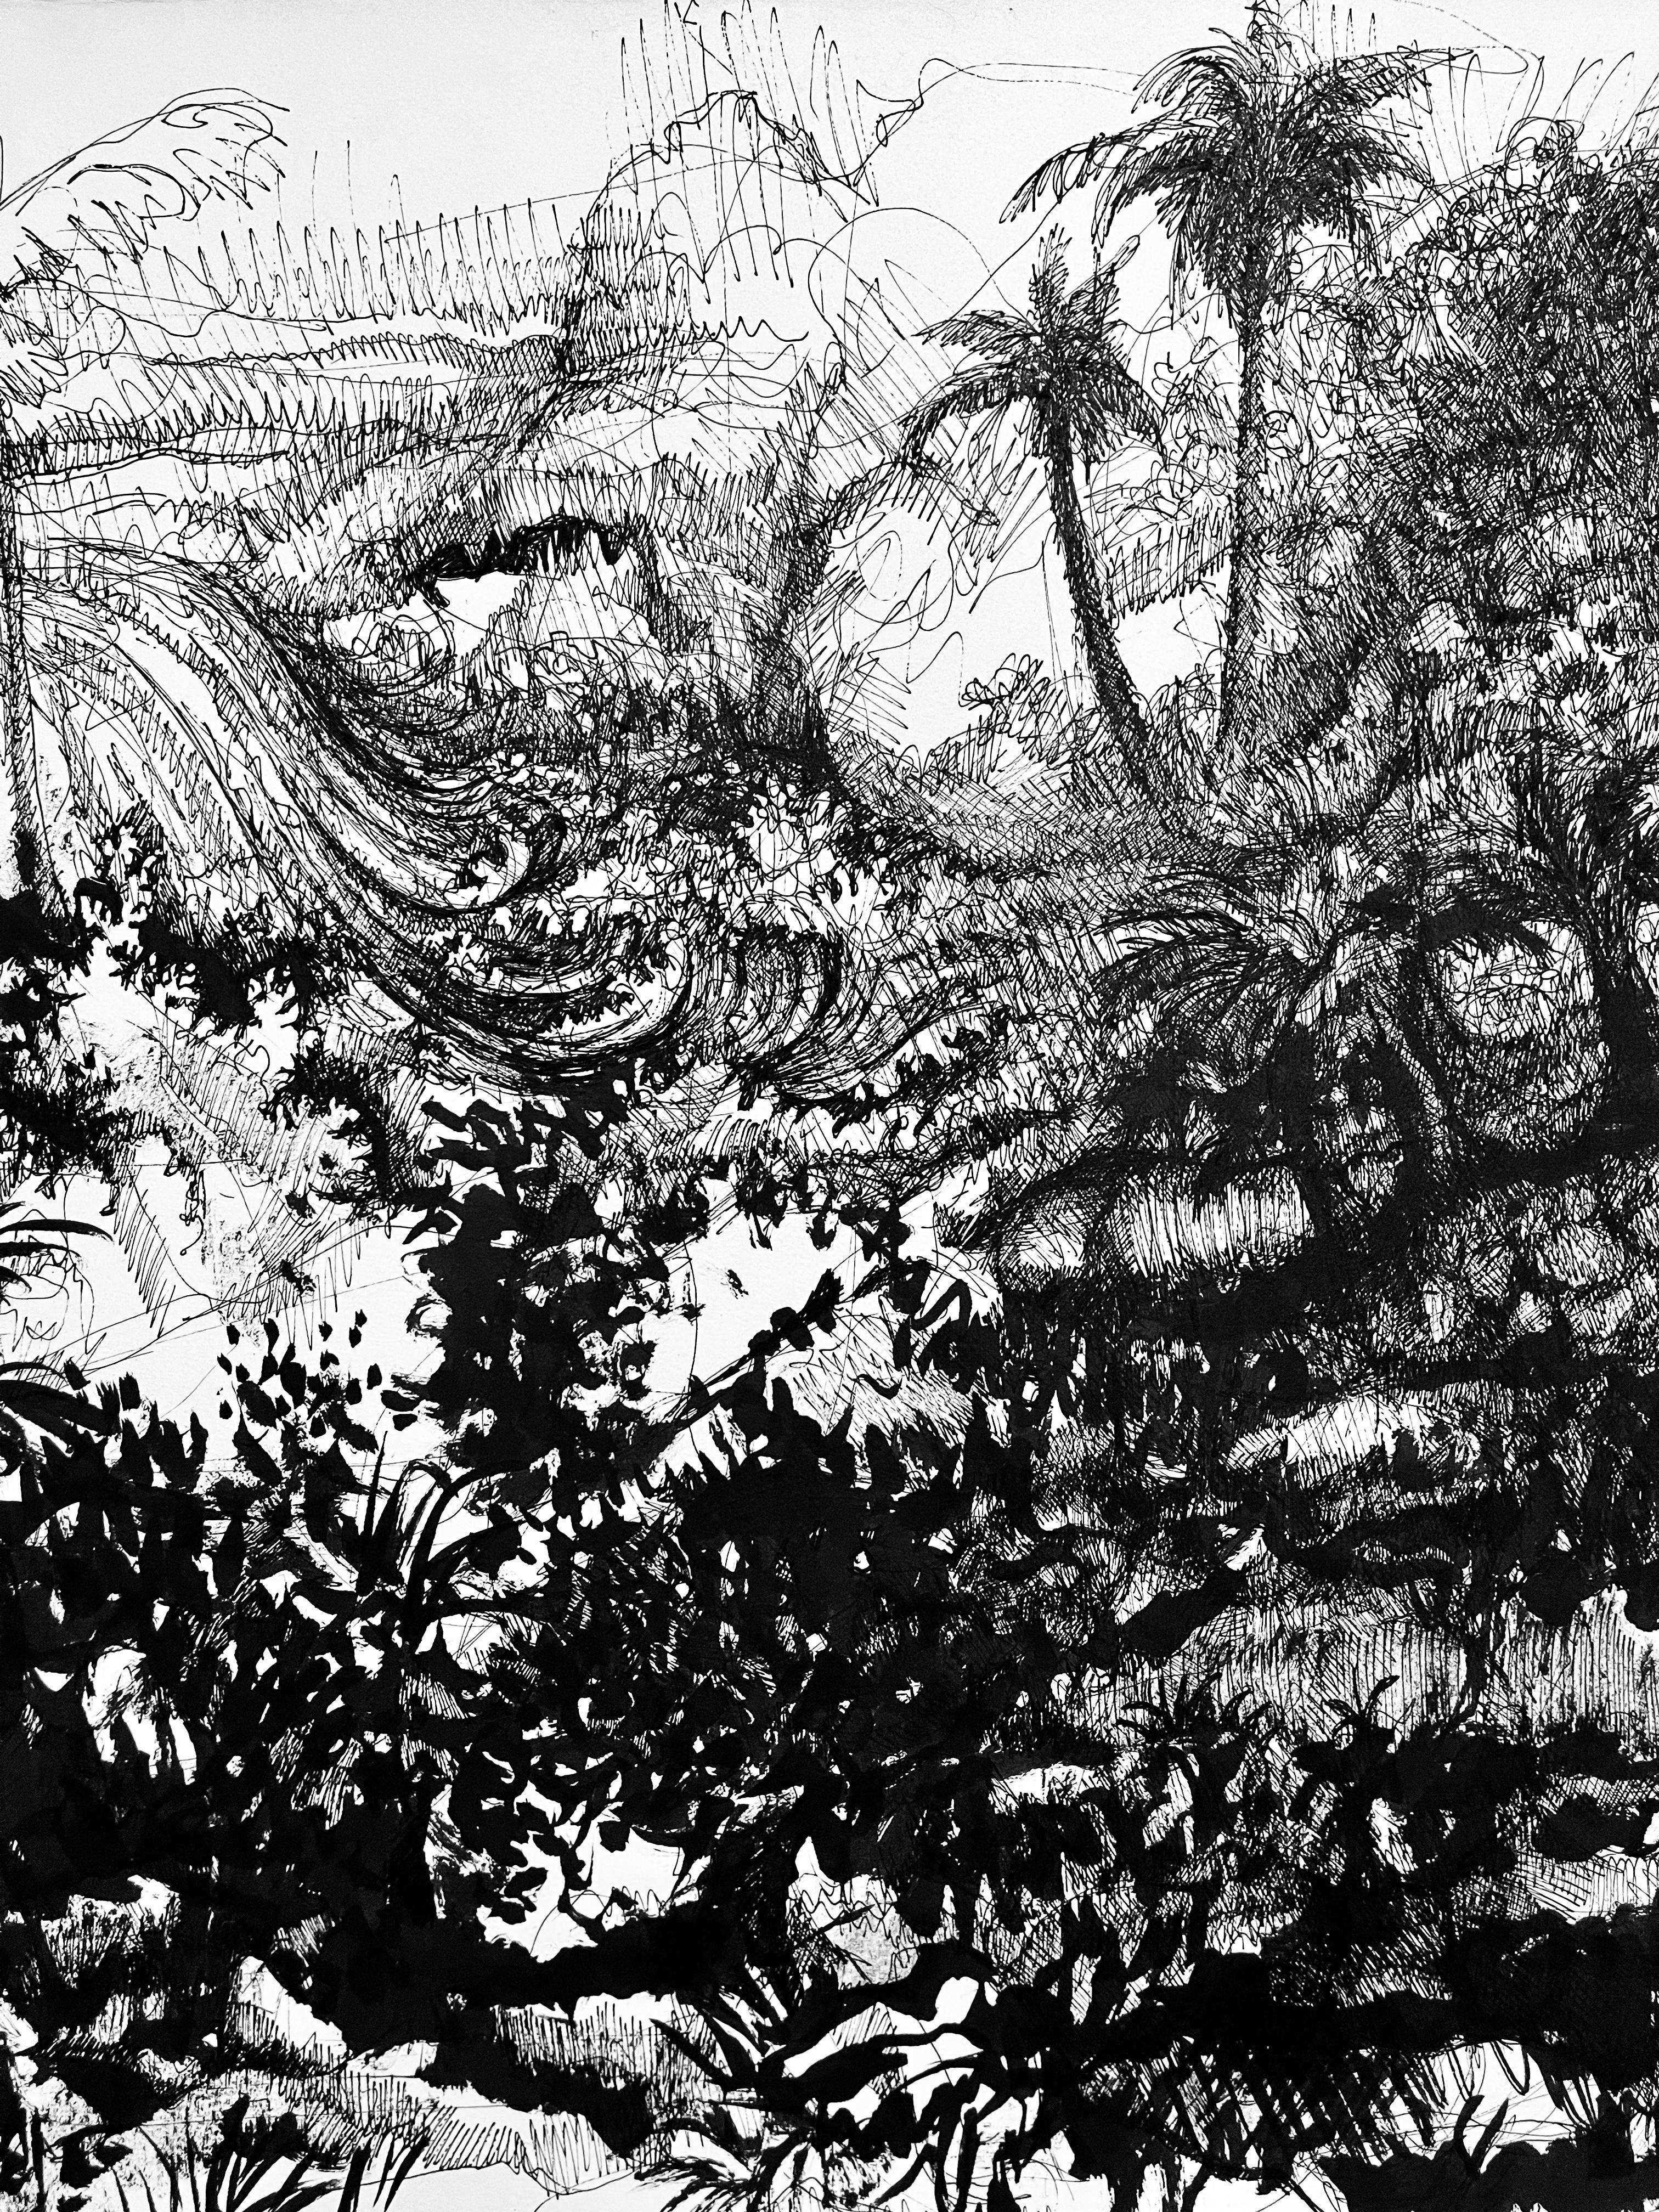 (Apocalyptic Tropical Landscape) Ohne Titel (Surrealismus), Art, von Ian Hornak